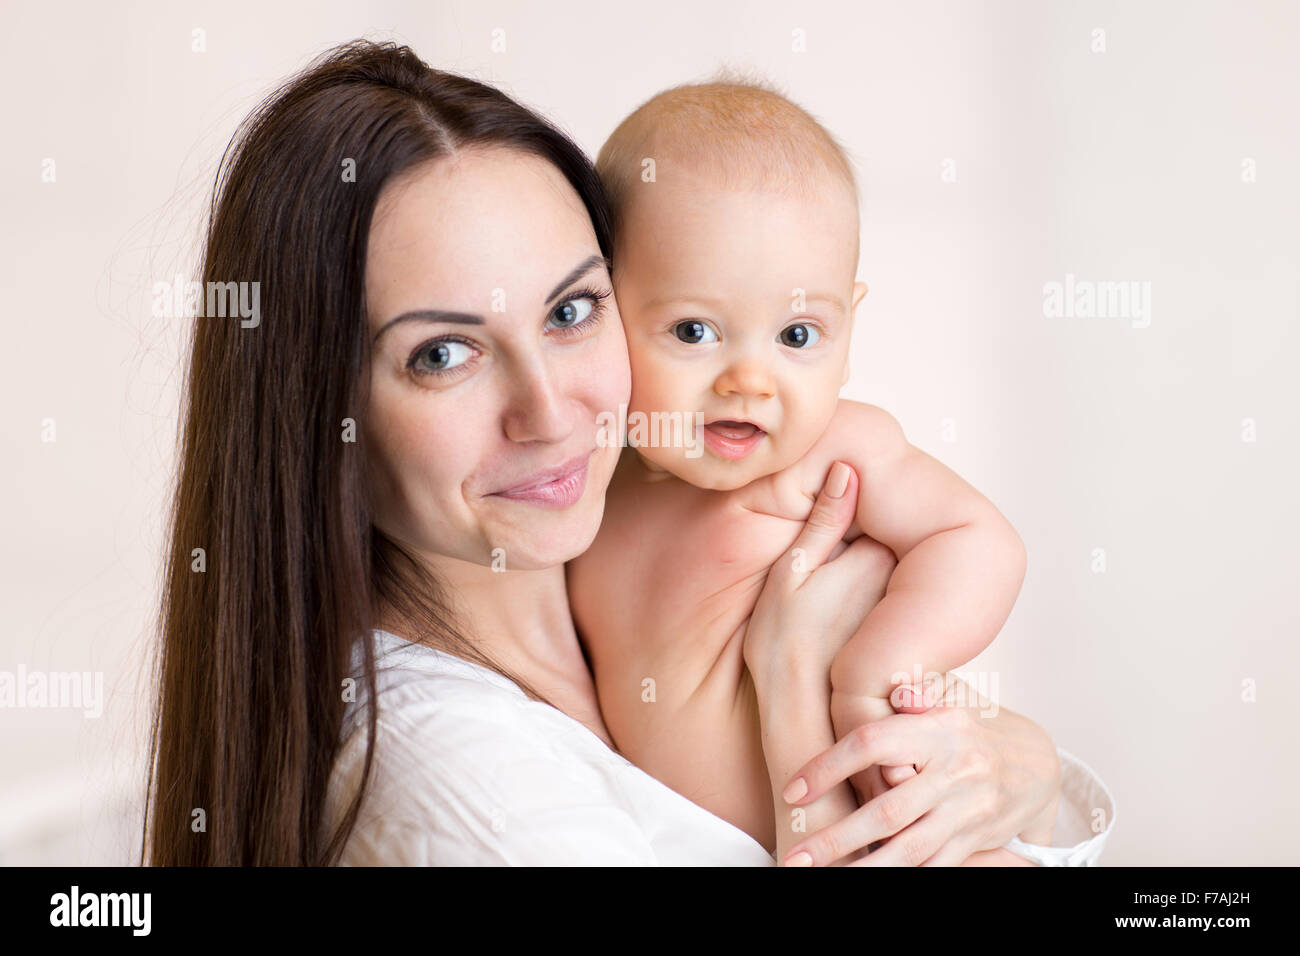 Baby and mother portrait.  Childhood, motherhood, happy family Stock Photo